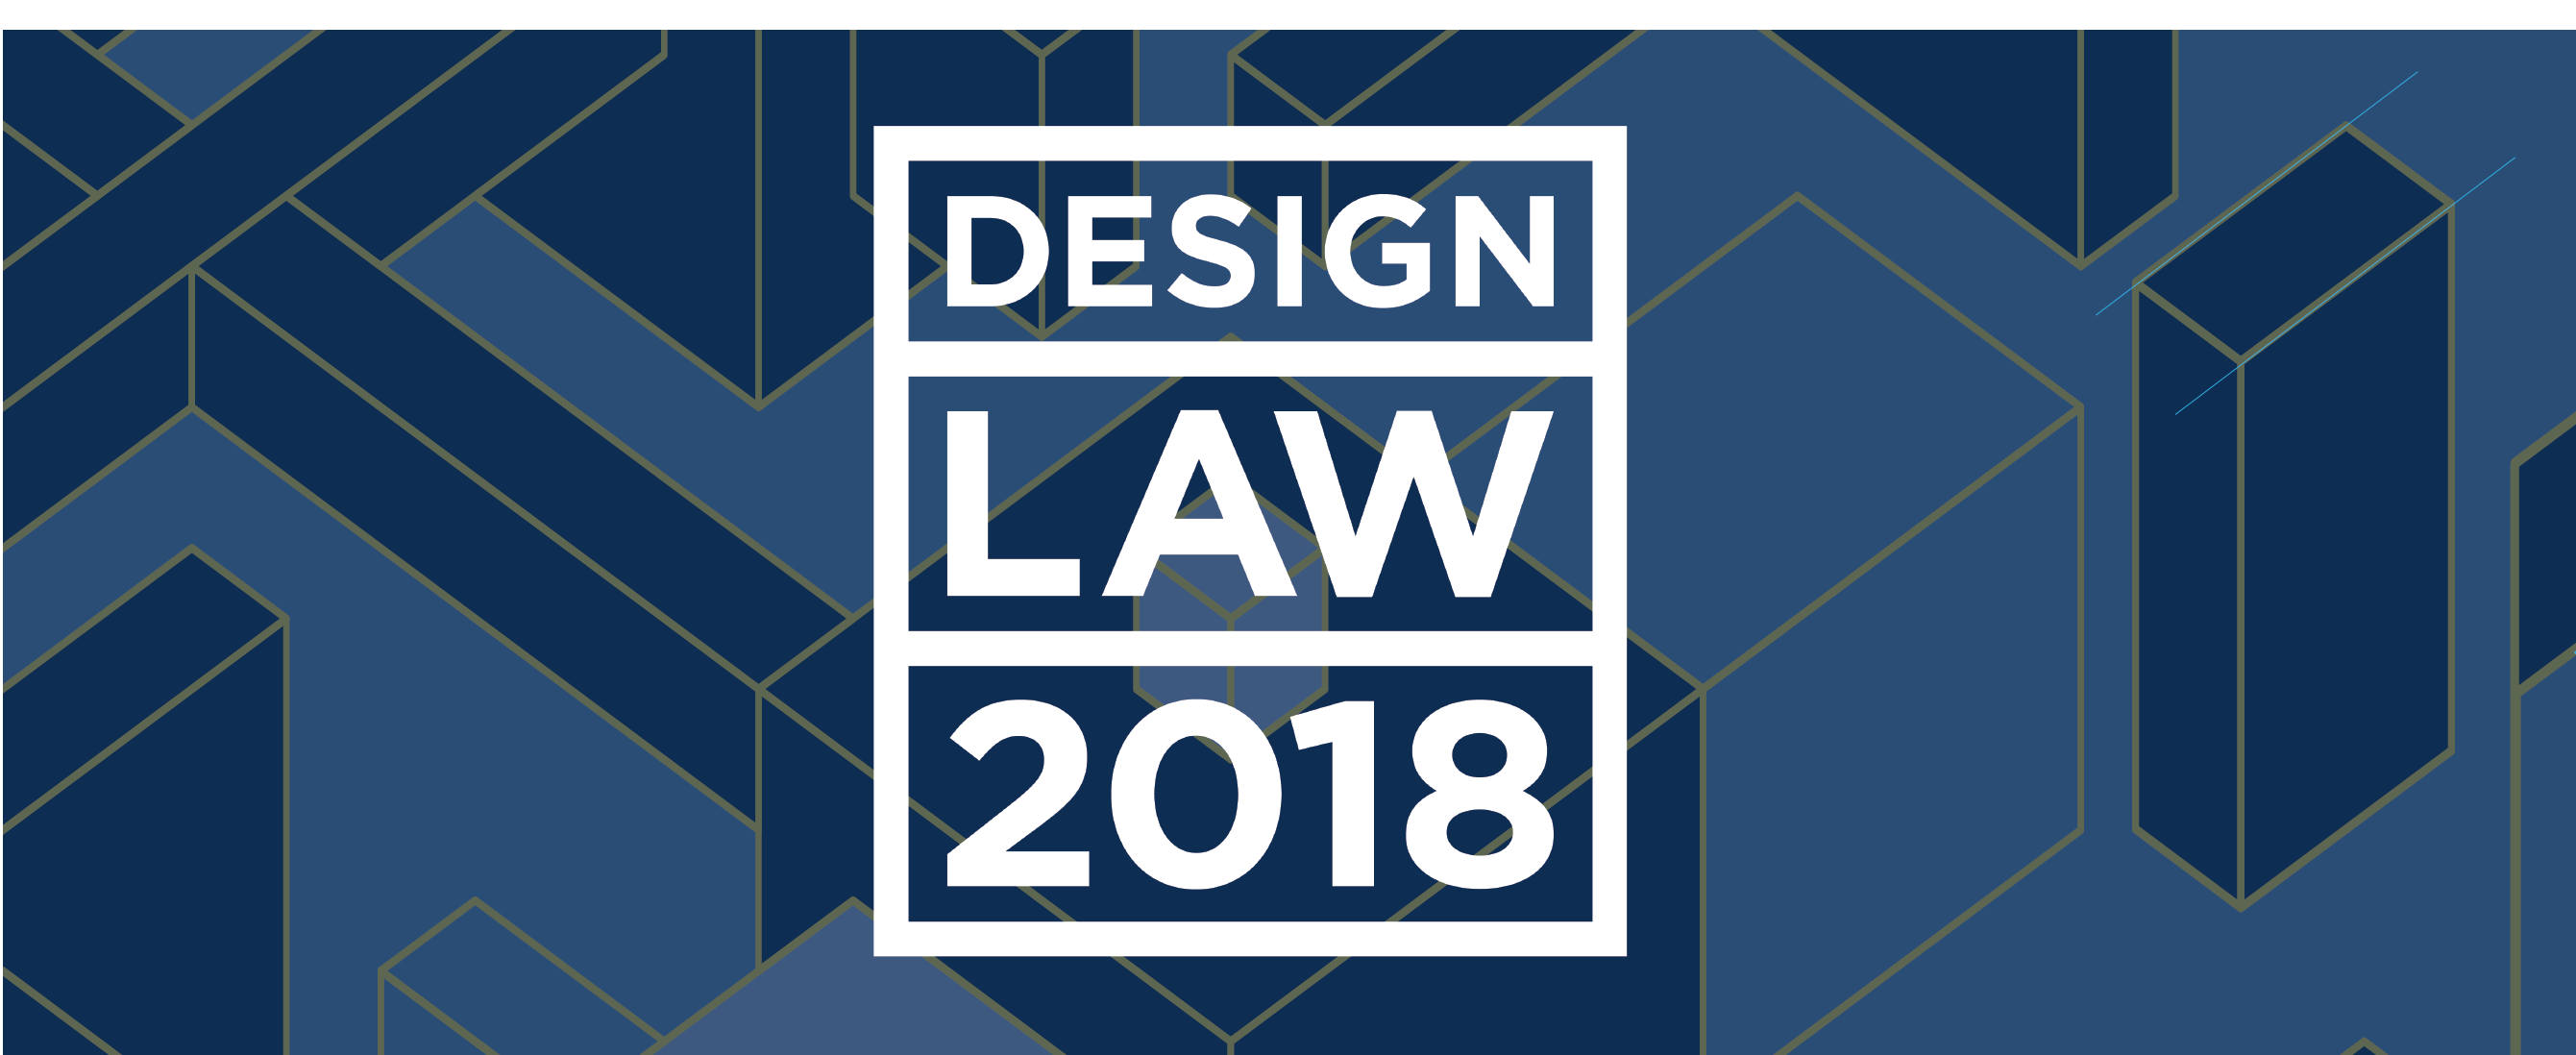 Design Law 2018